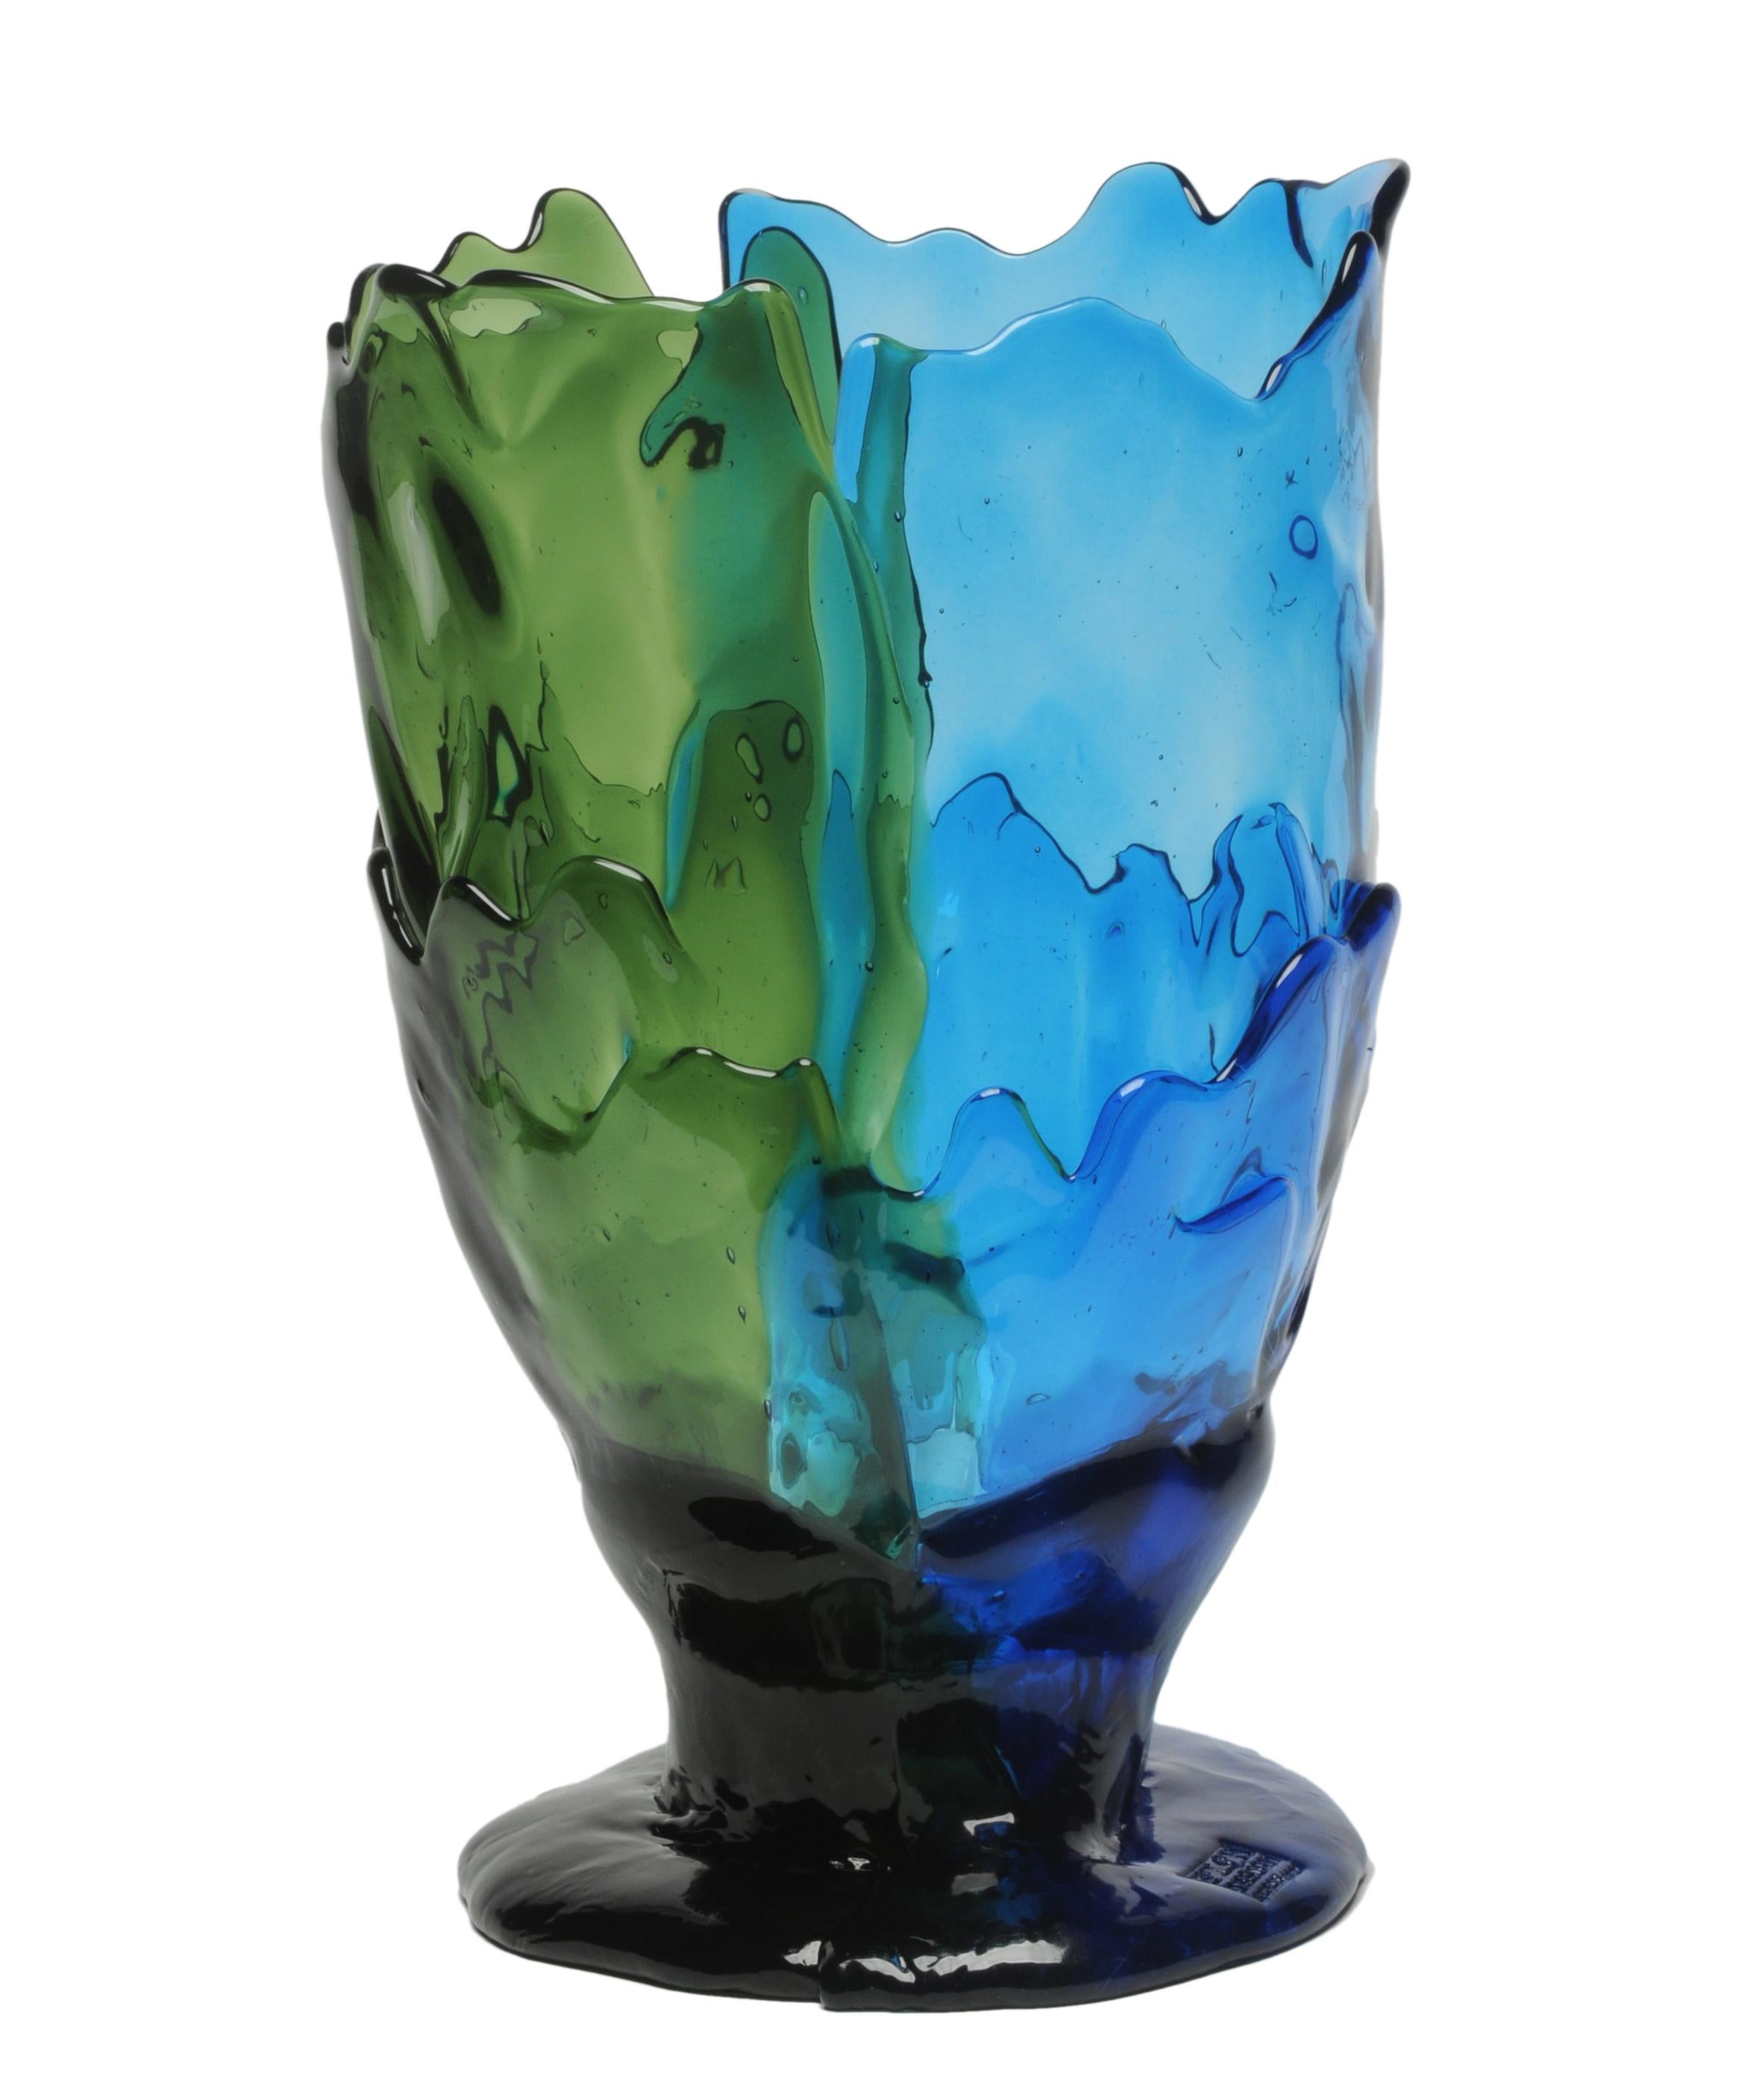 Italian Contemporary Gaetano Pesce Twins-C L Vase Resin Green Blue For Sale